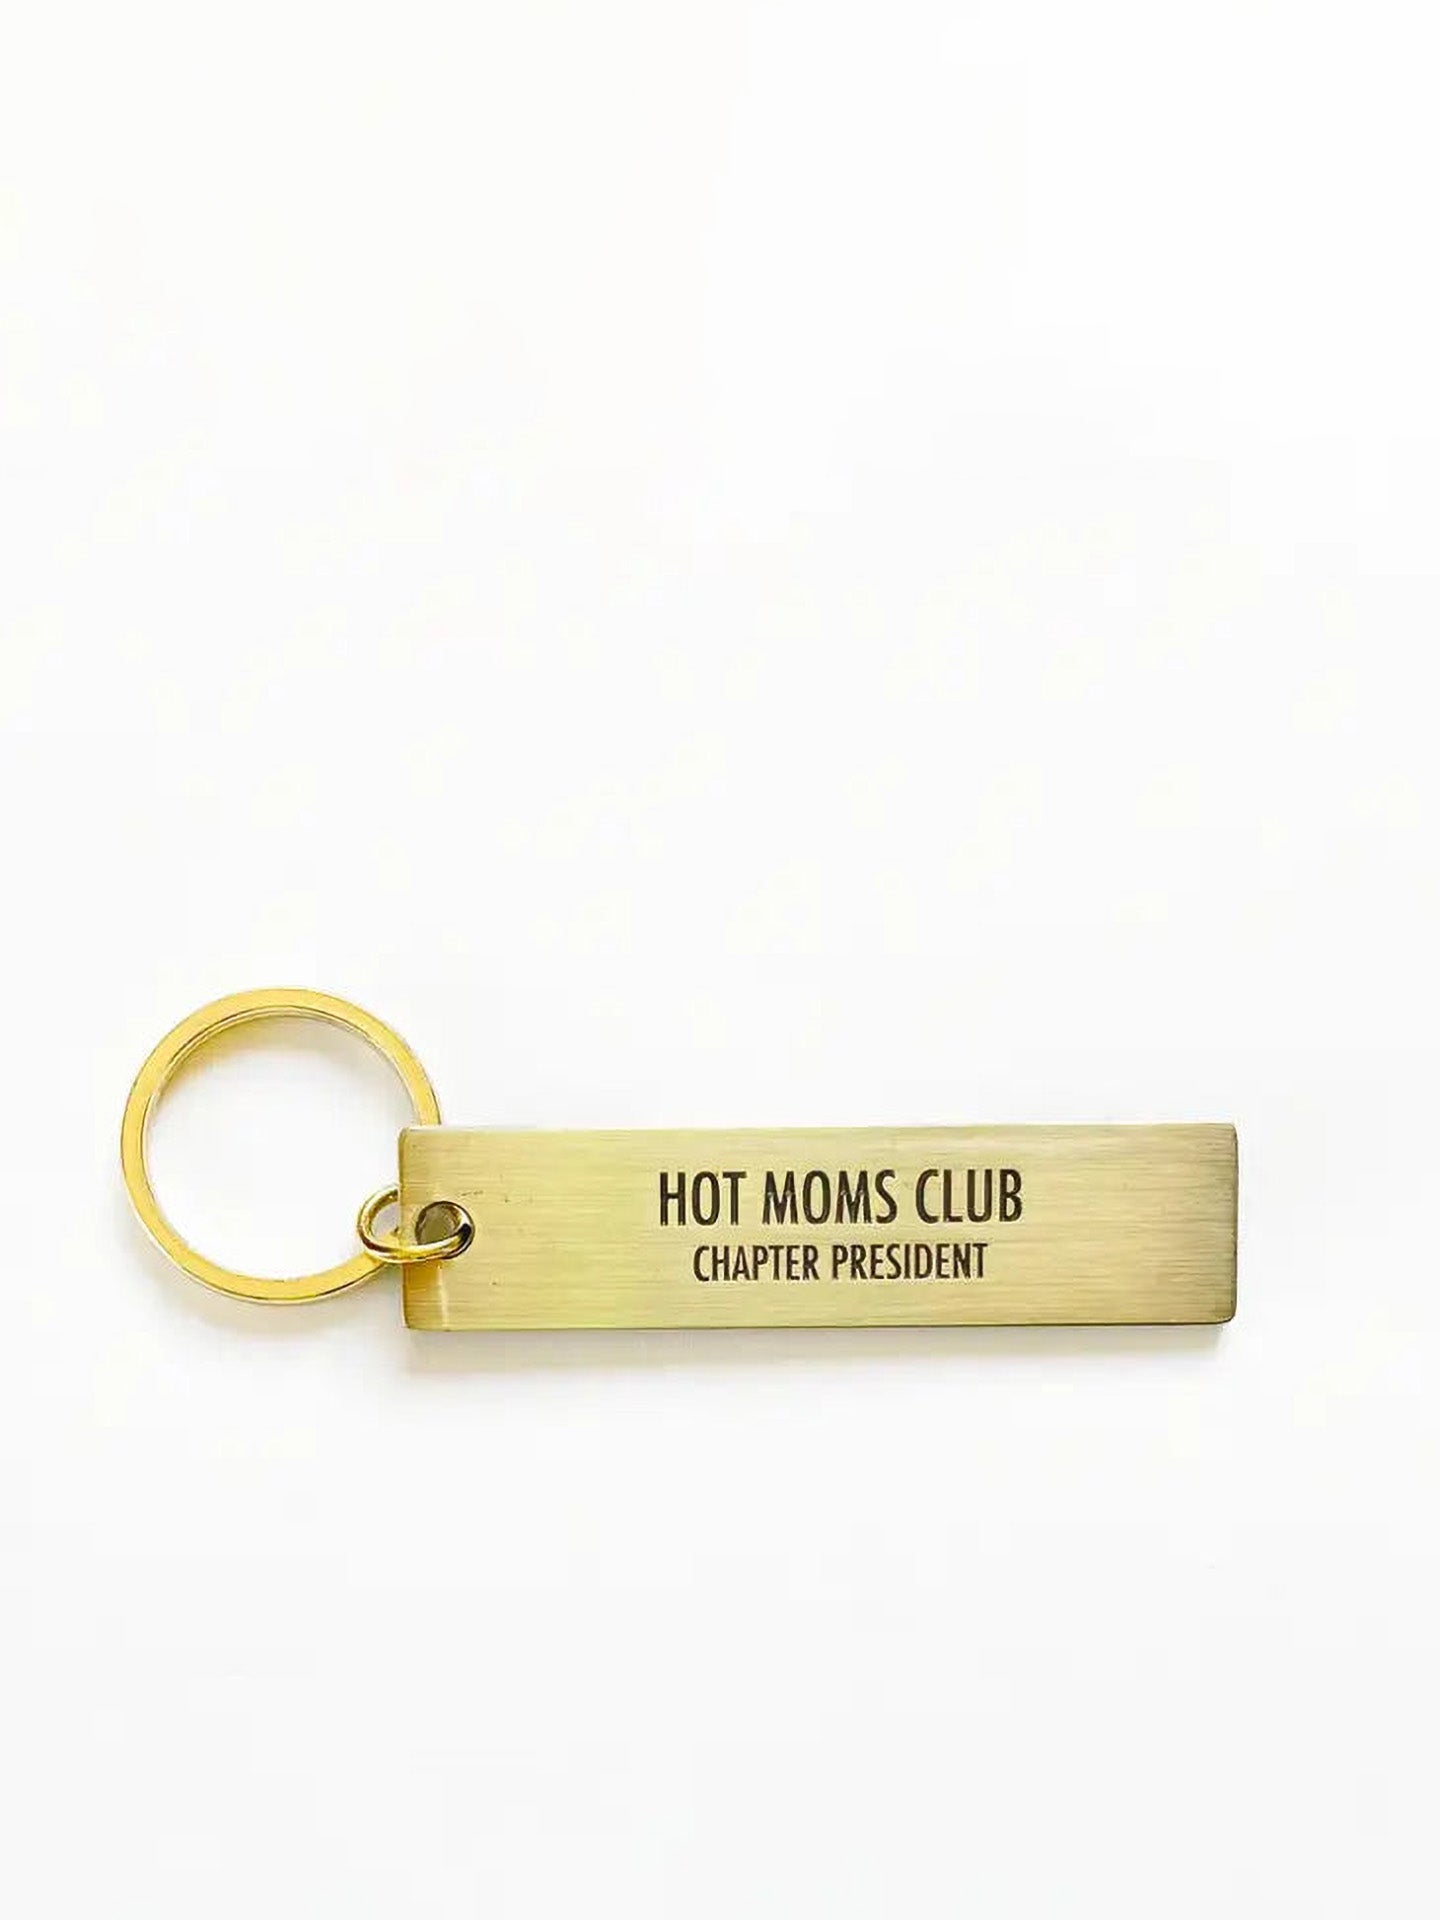 Hot Mom's Club key tag